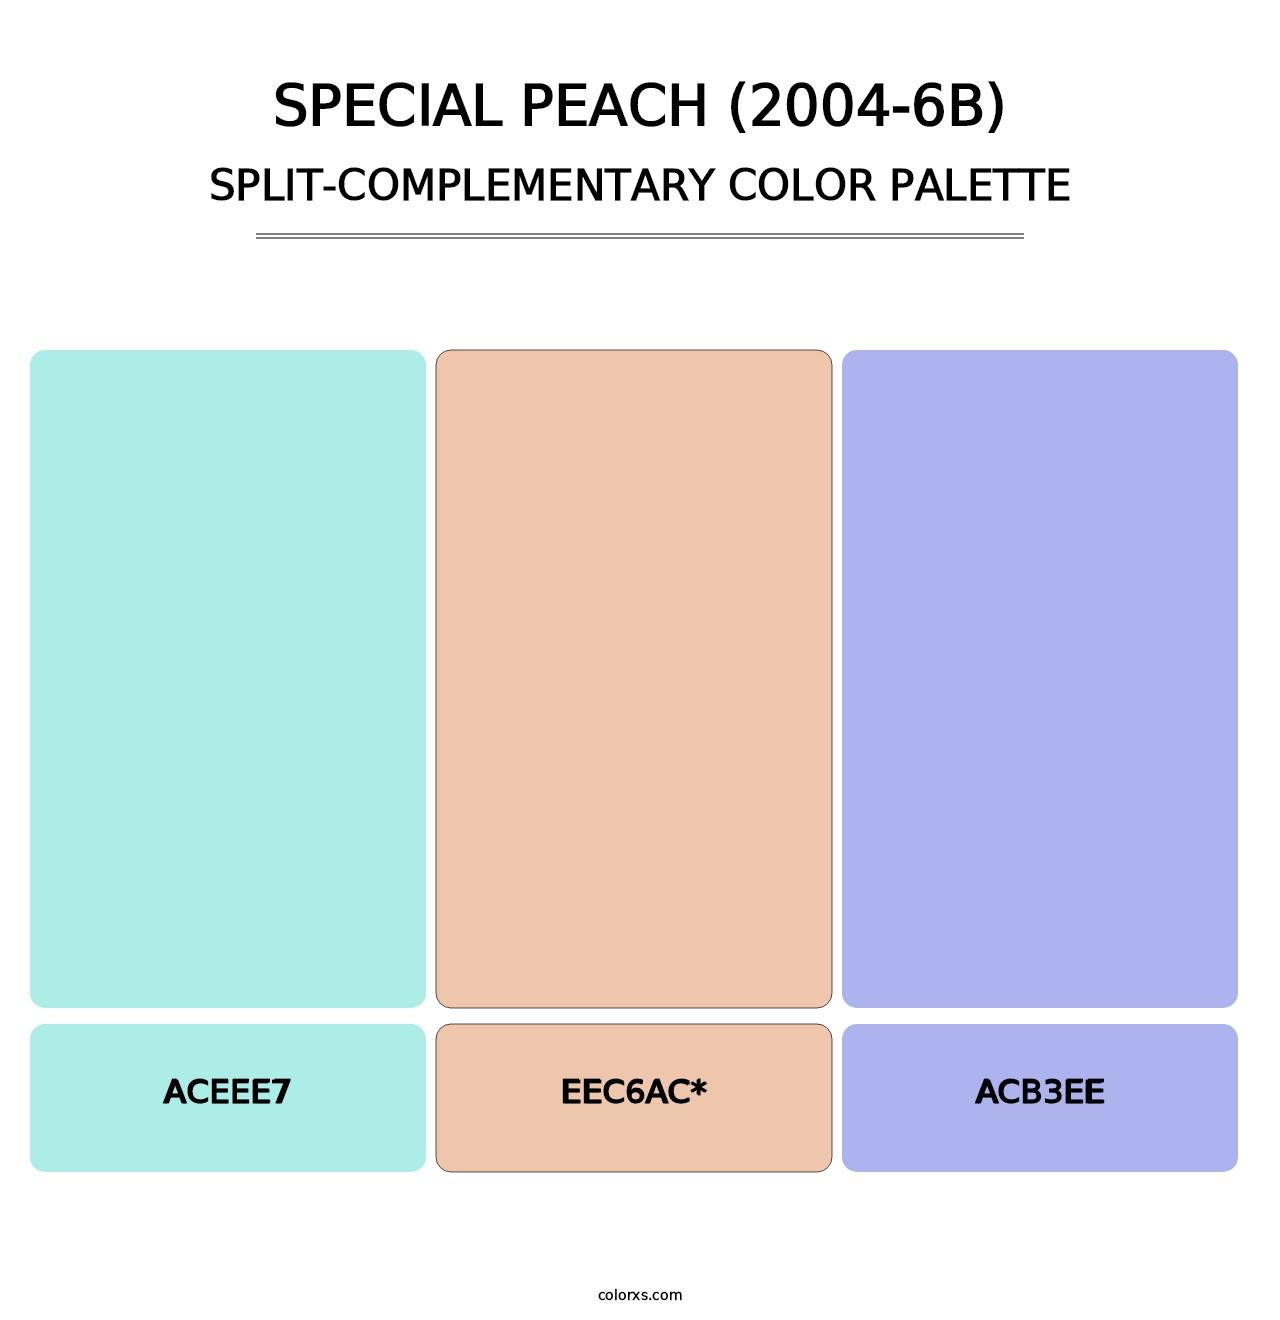 Special Peach (2004-6B) - Split-Complementary Color Palette